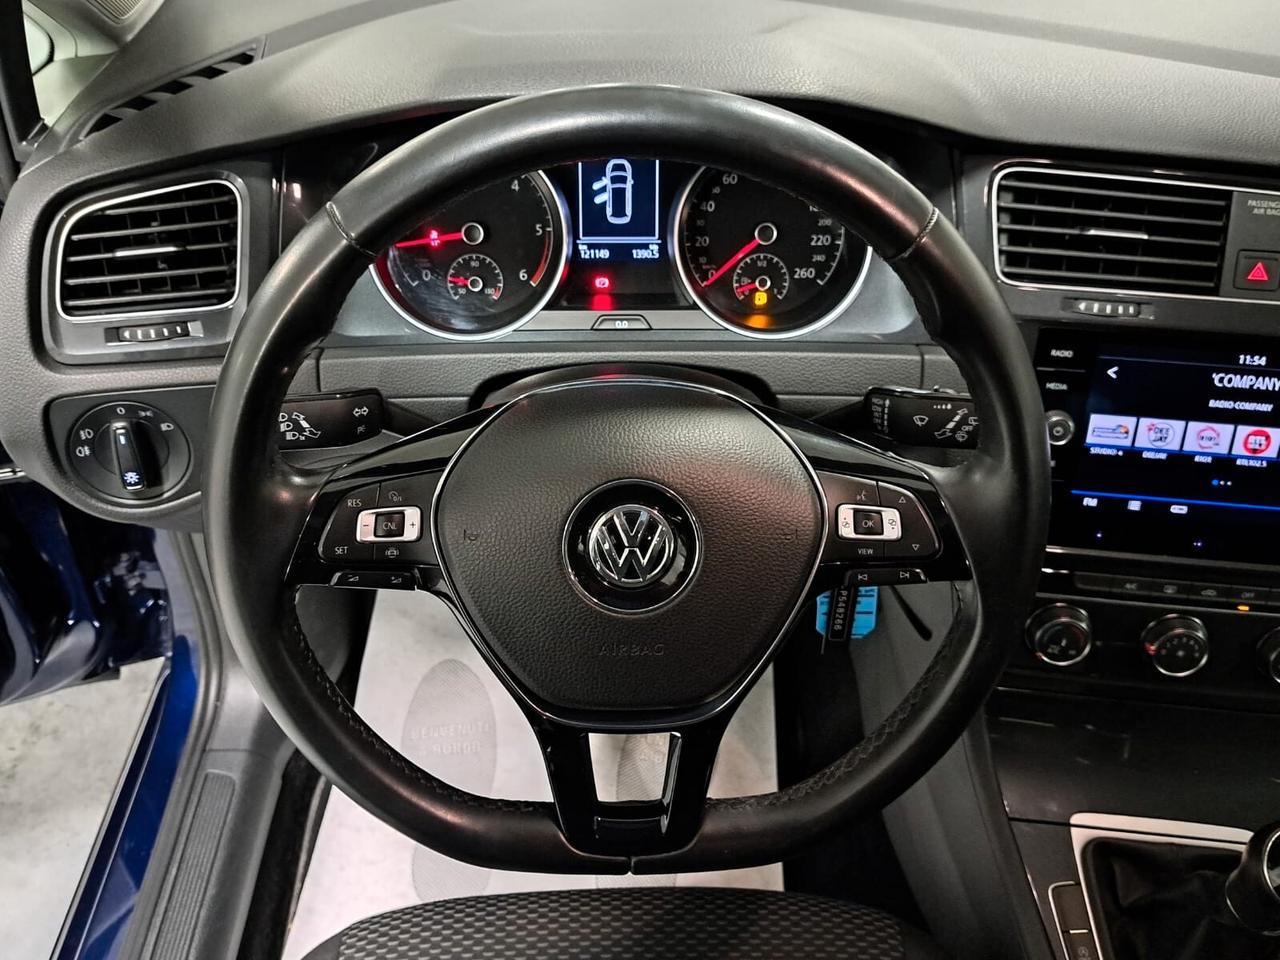 Volkswagen Golf Variant 1600 TDI 116CV BlueMotion Technology Trendline